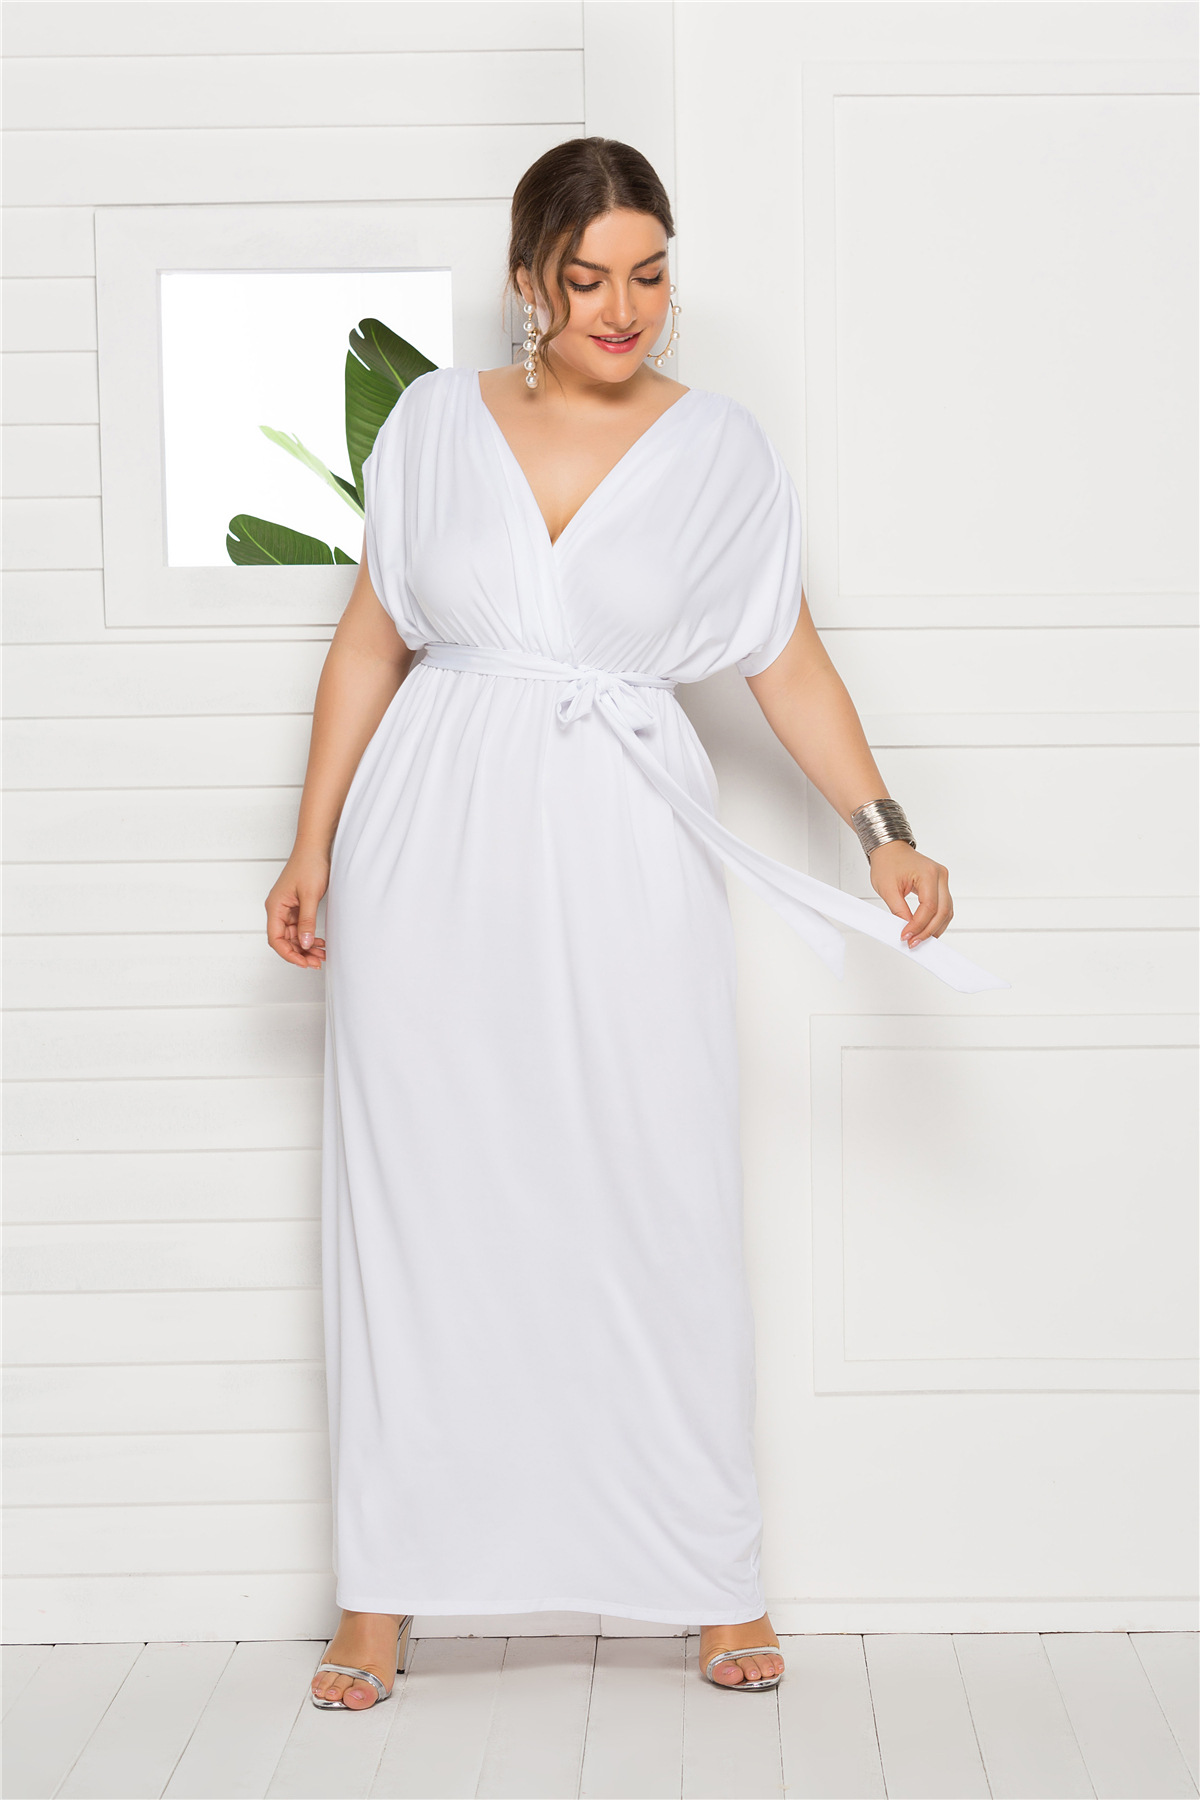 casual white dress plus size